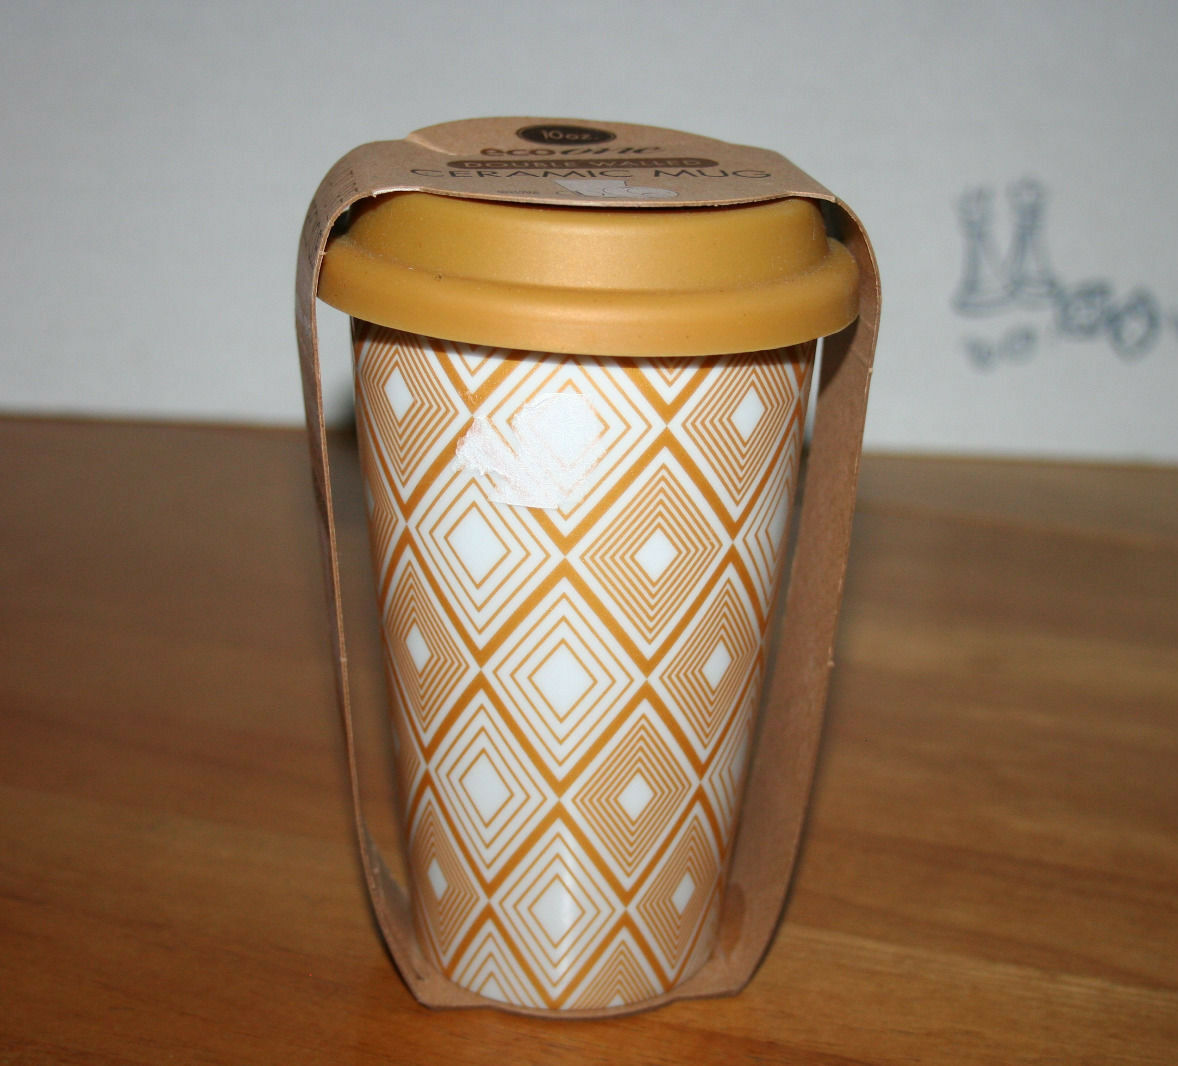 Double Walled Tumbler Eco One Porcelain Ceramic Mug Geometric Diamond Design - $11.99